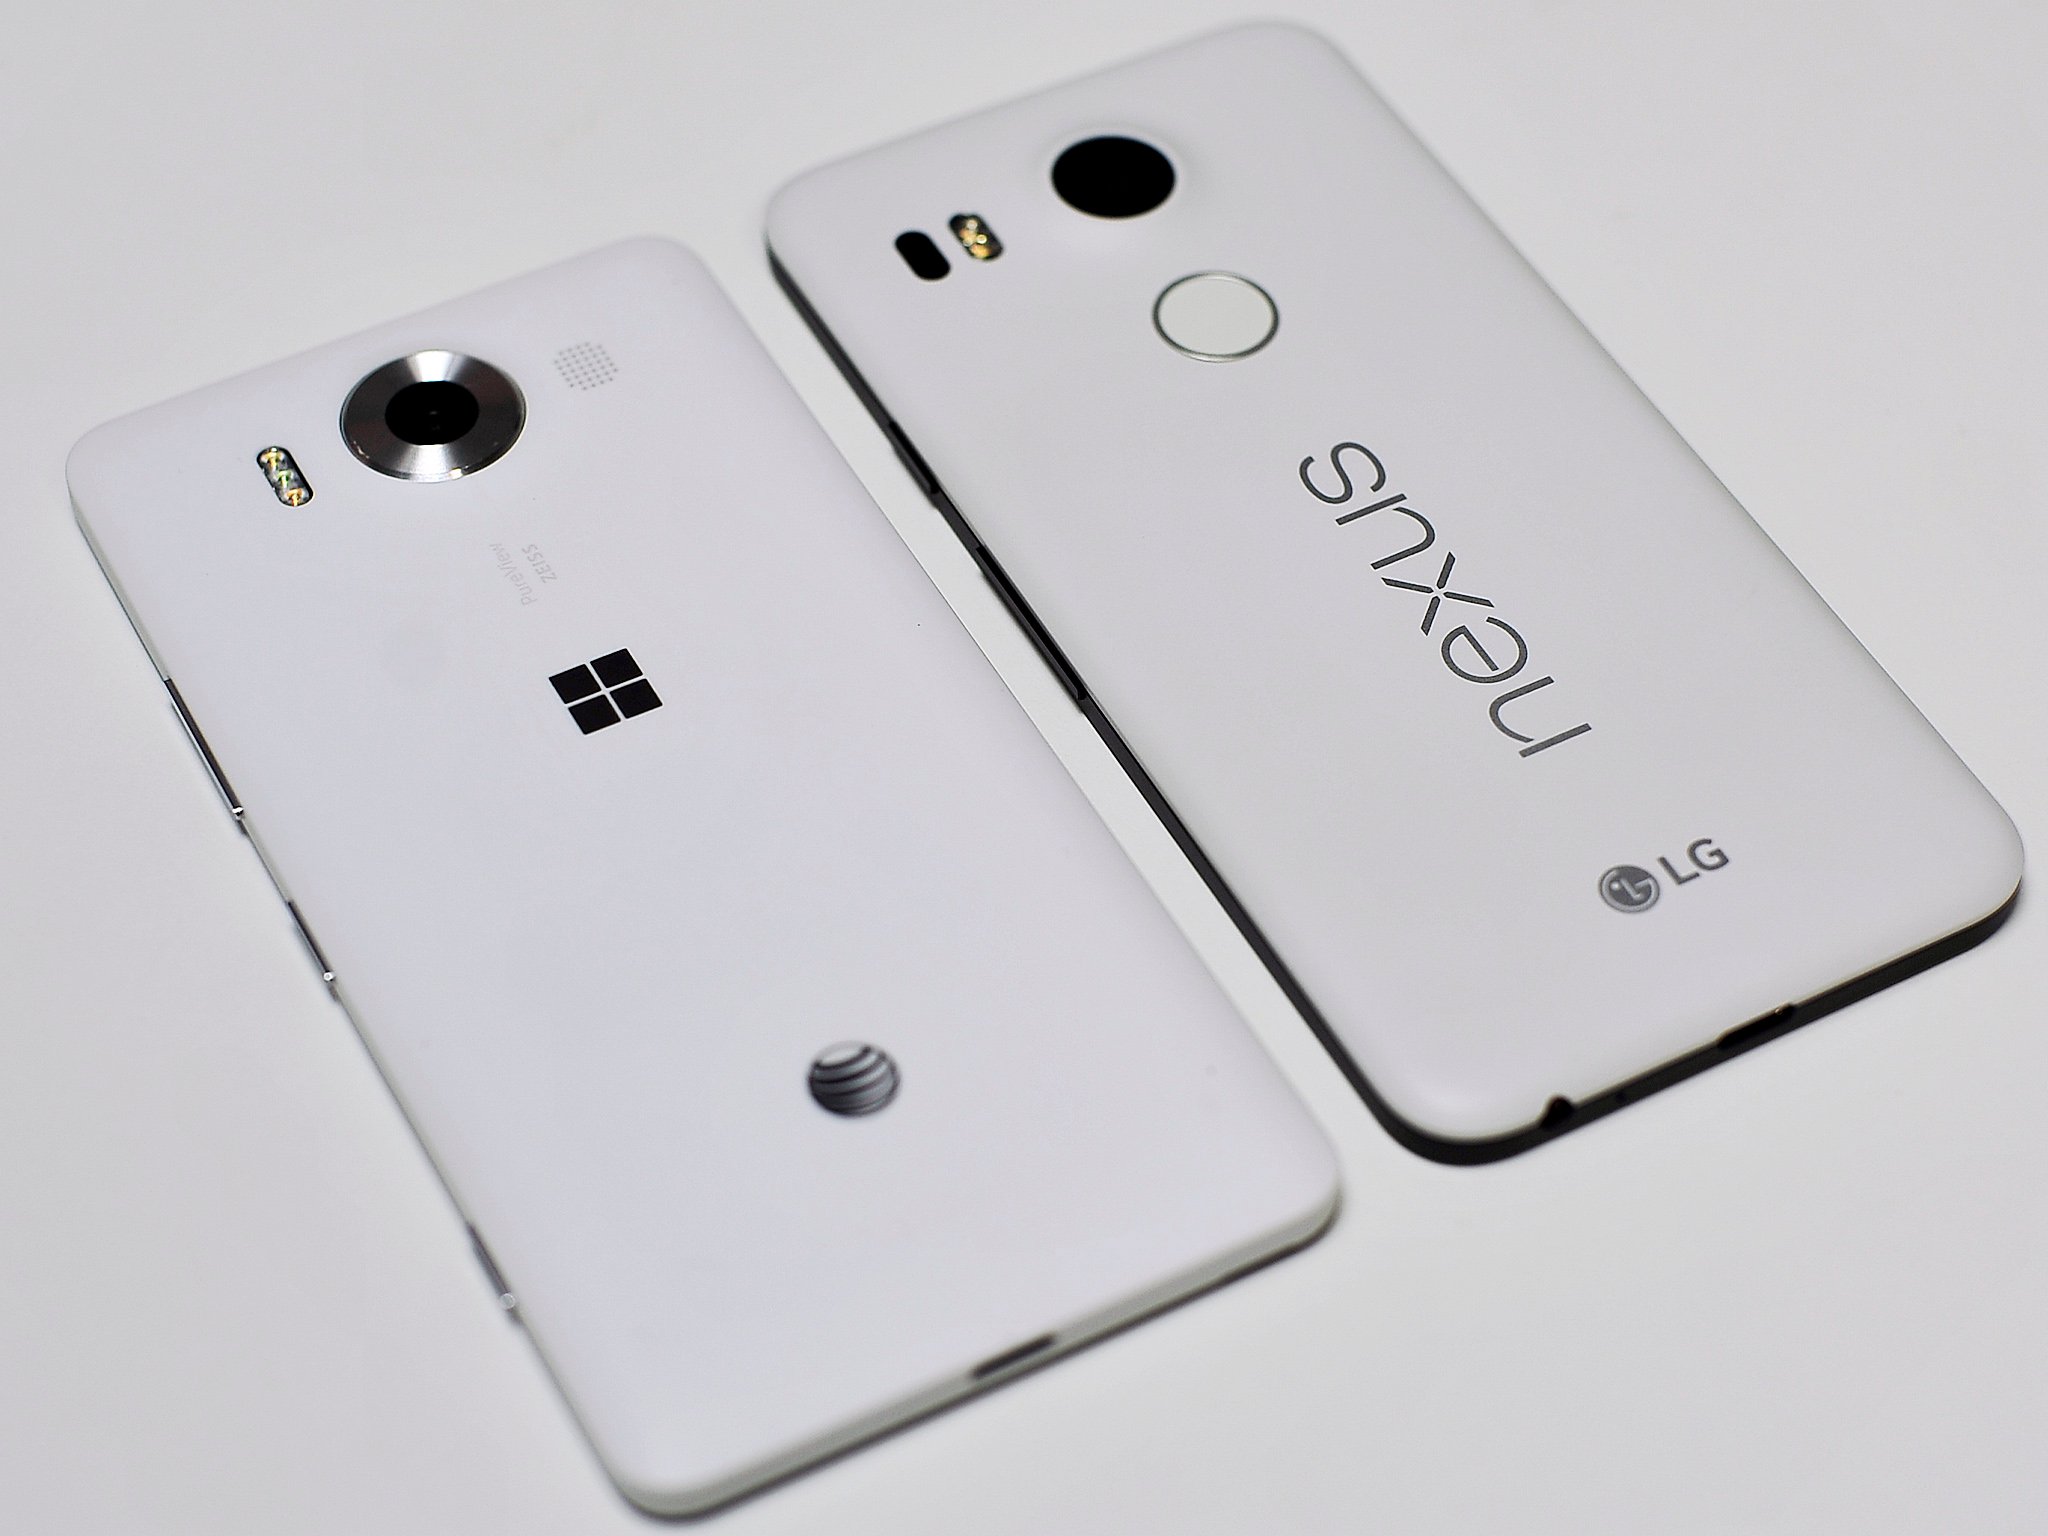 Microsoft Lumia 950 and Nexus 5X